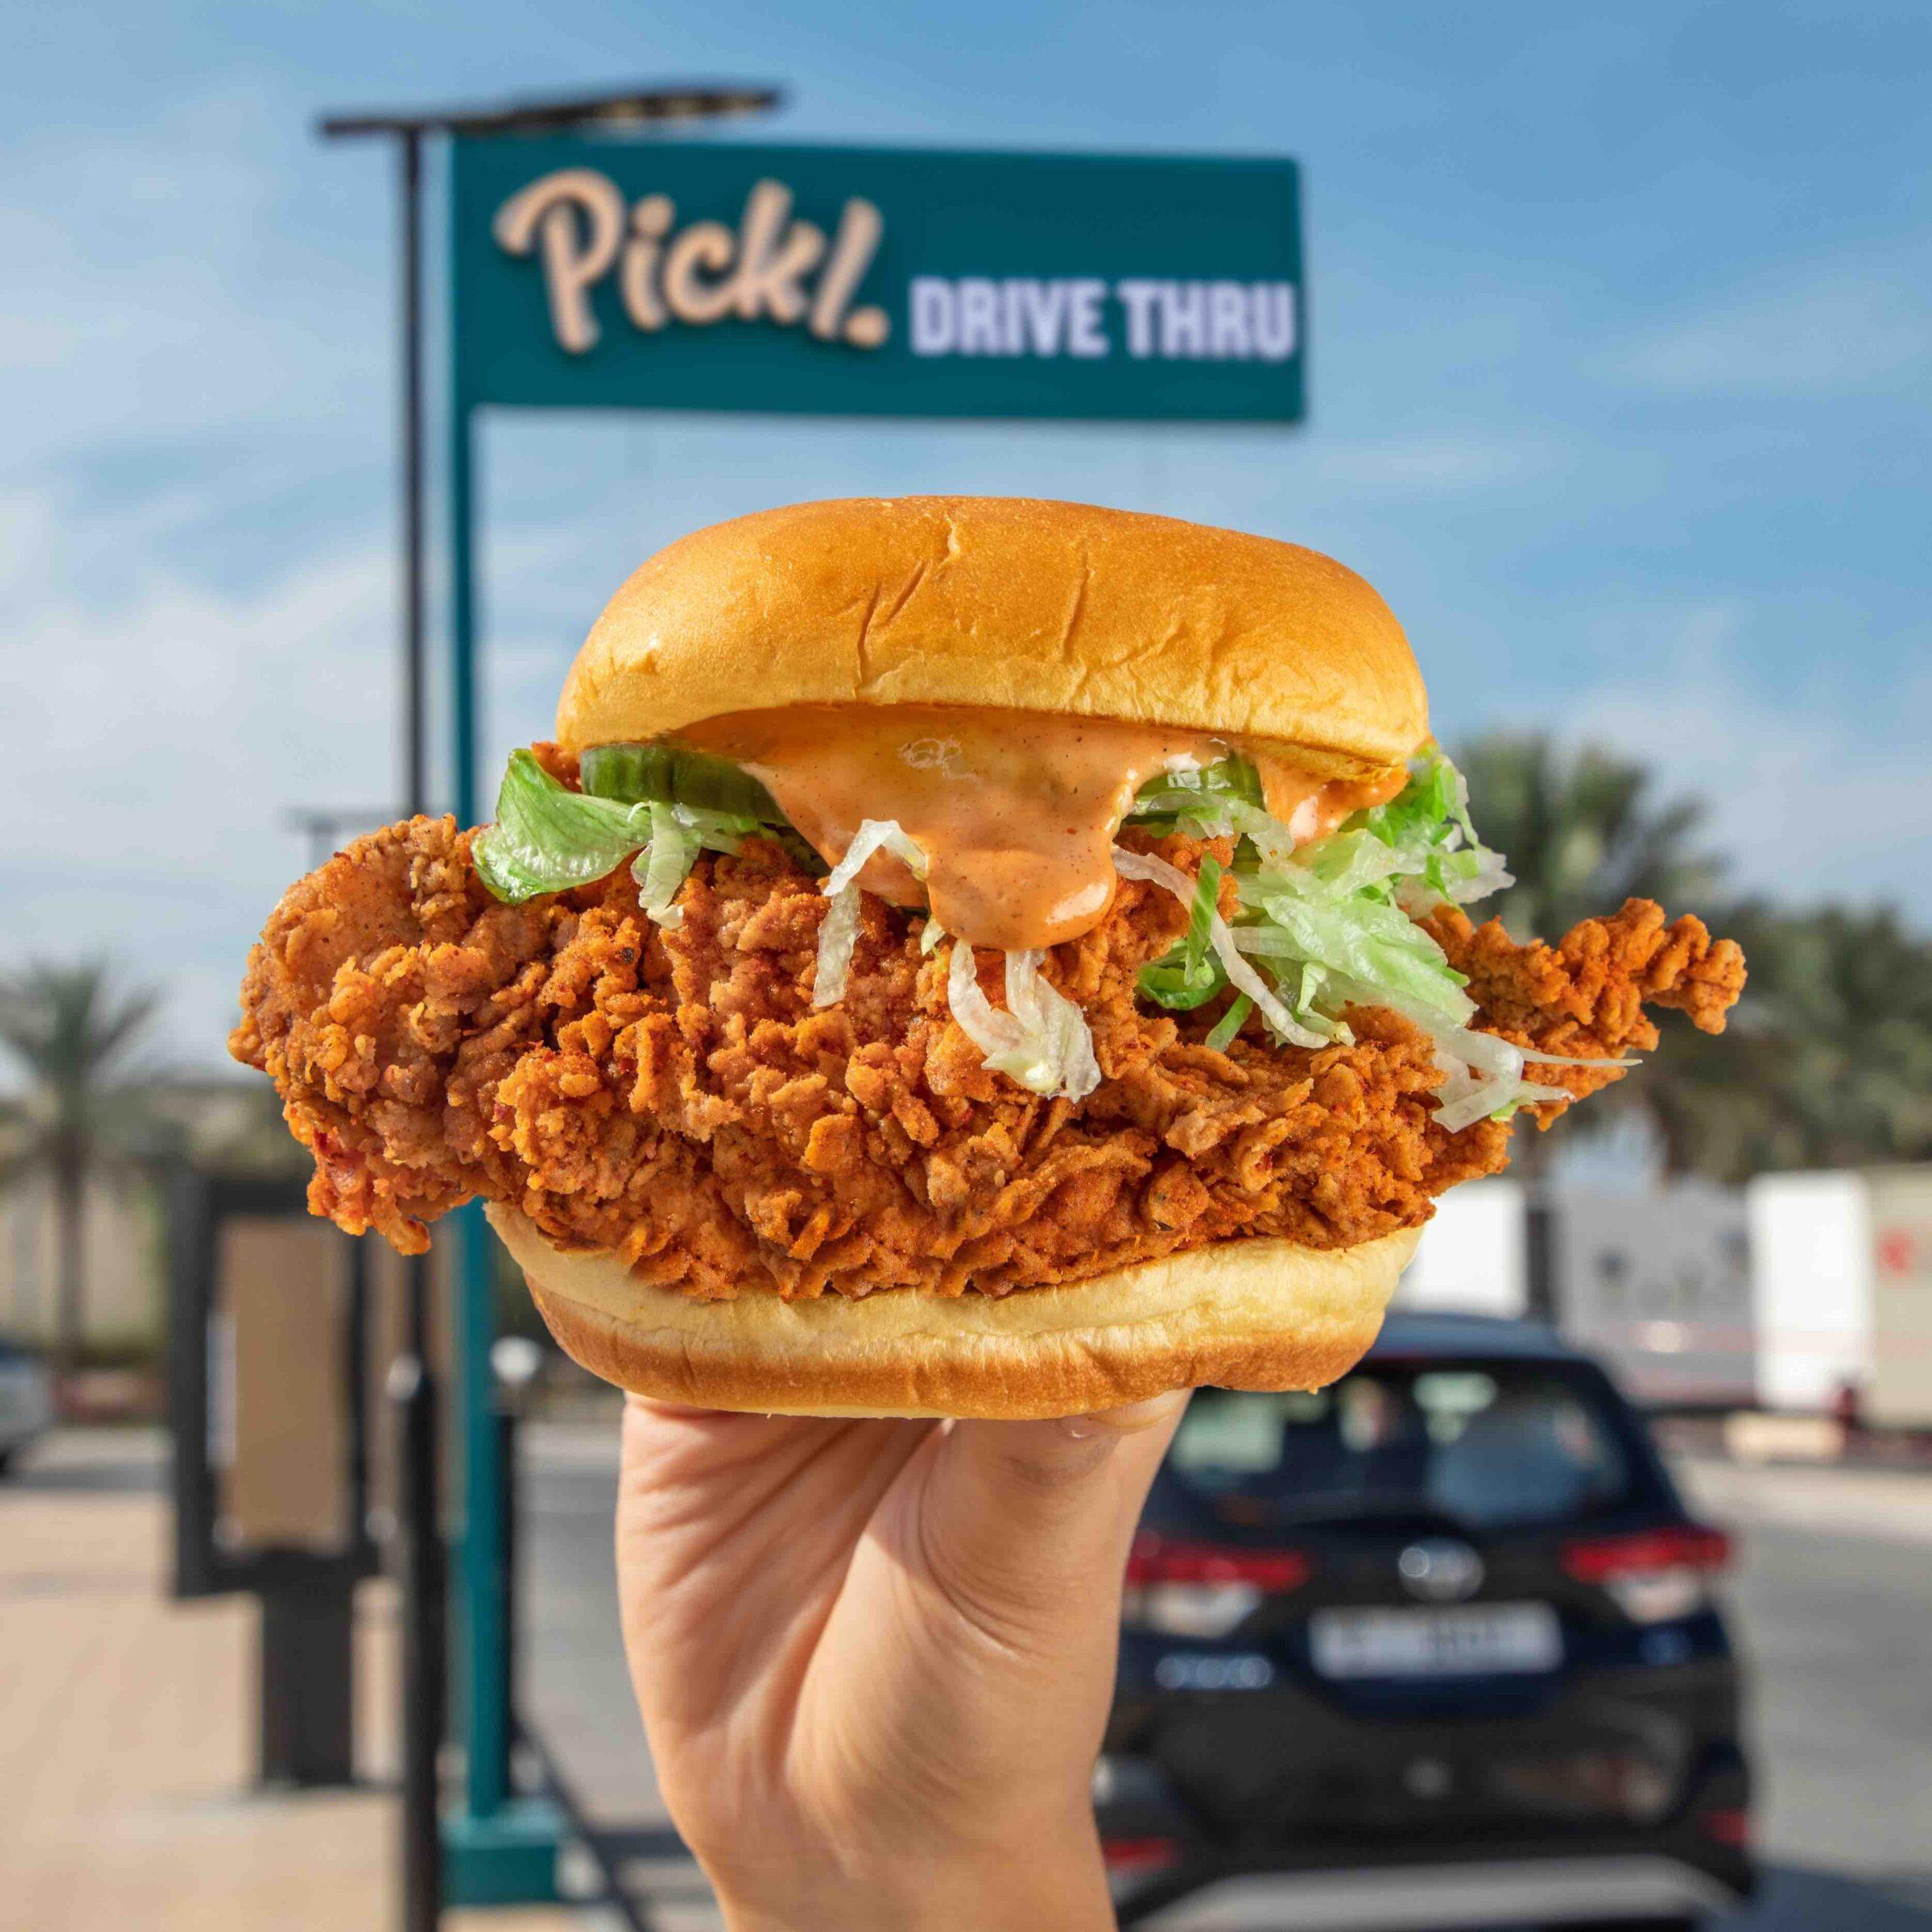 Award-winning burger brand Pickl opens a drive-through in Al Ain